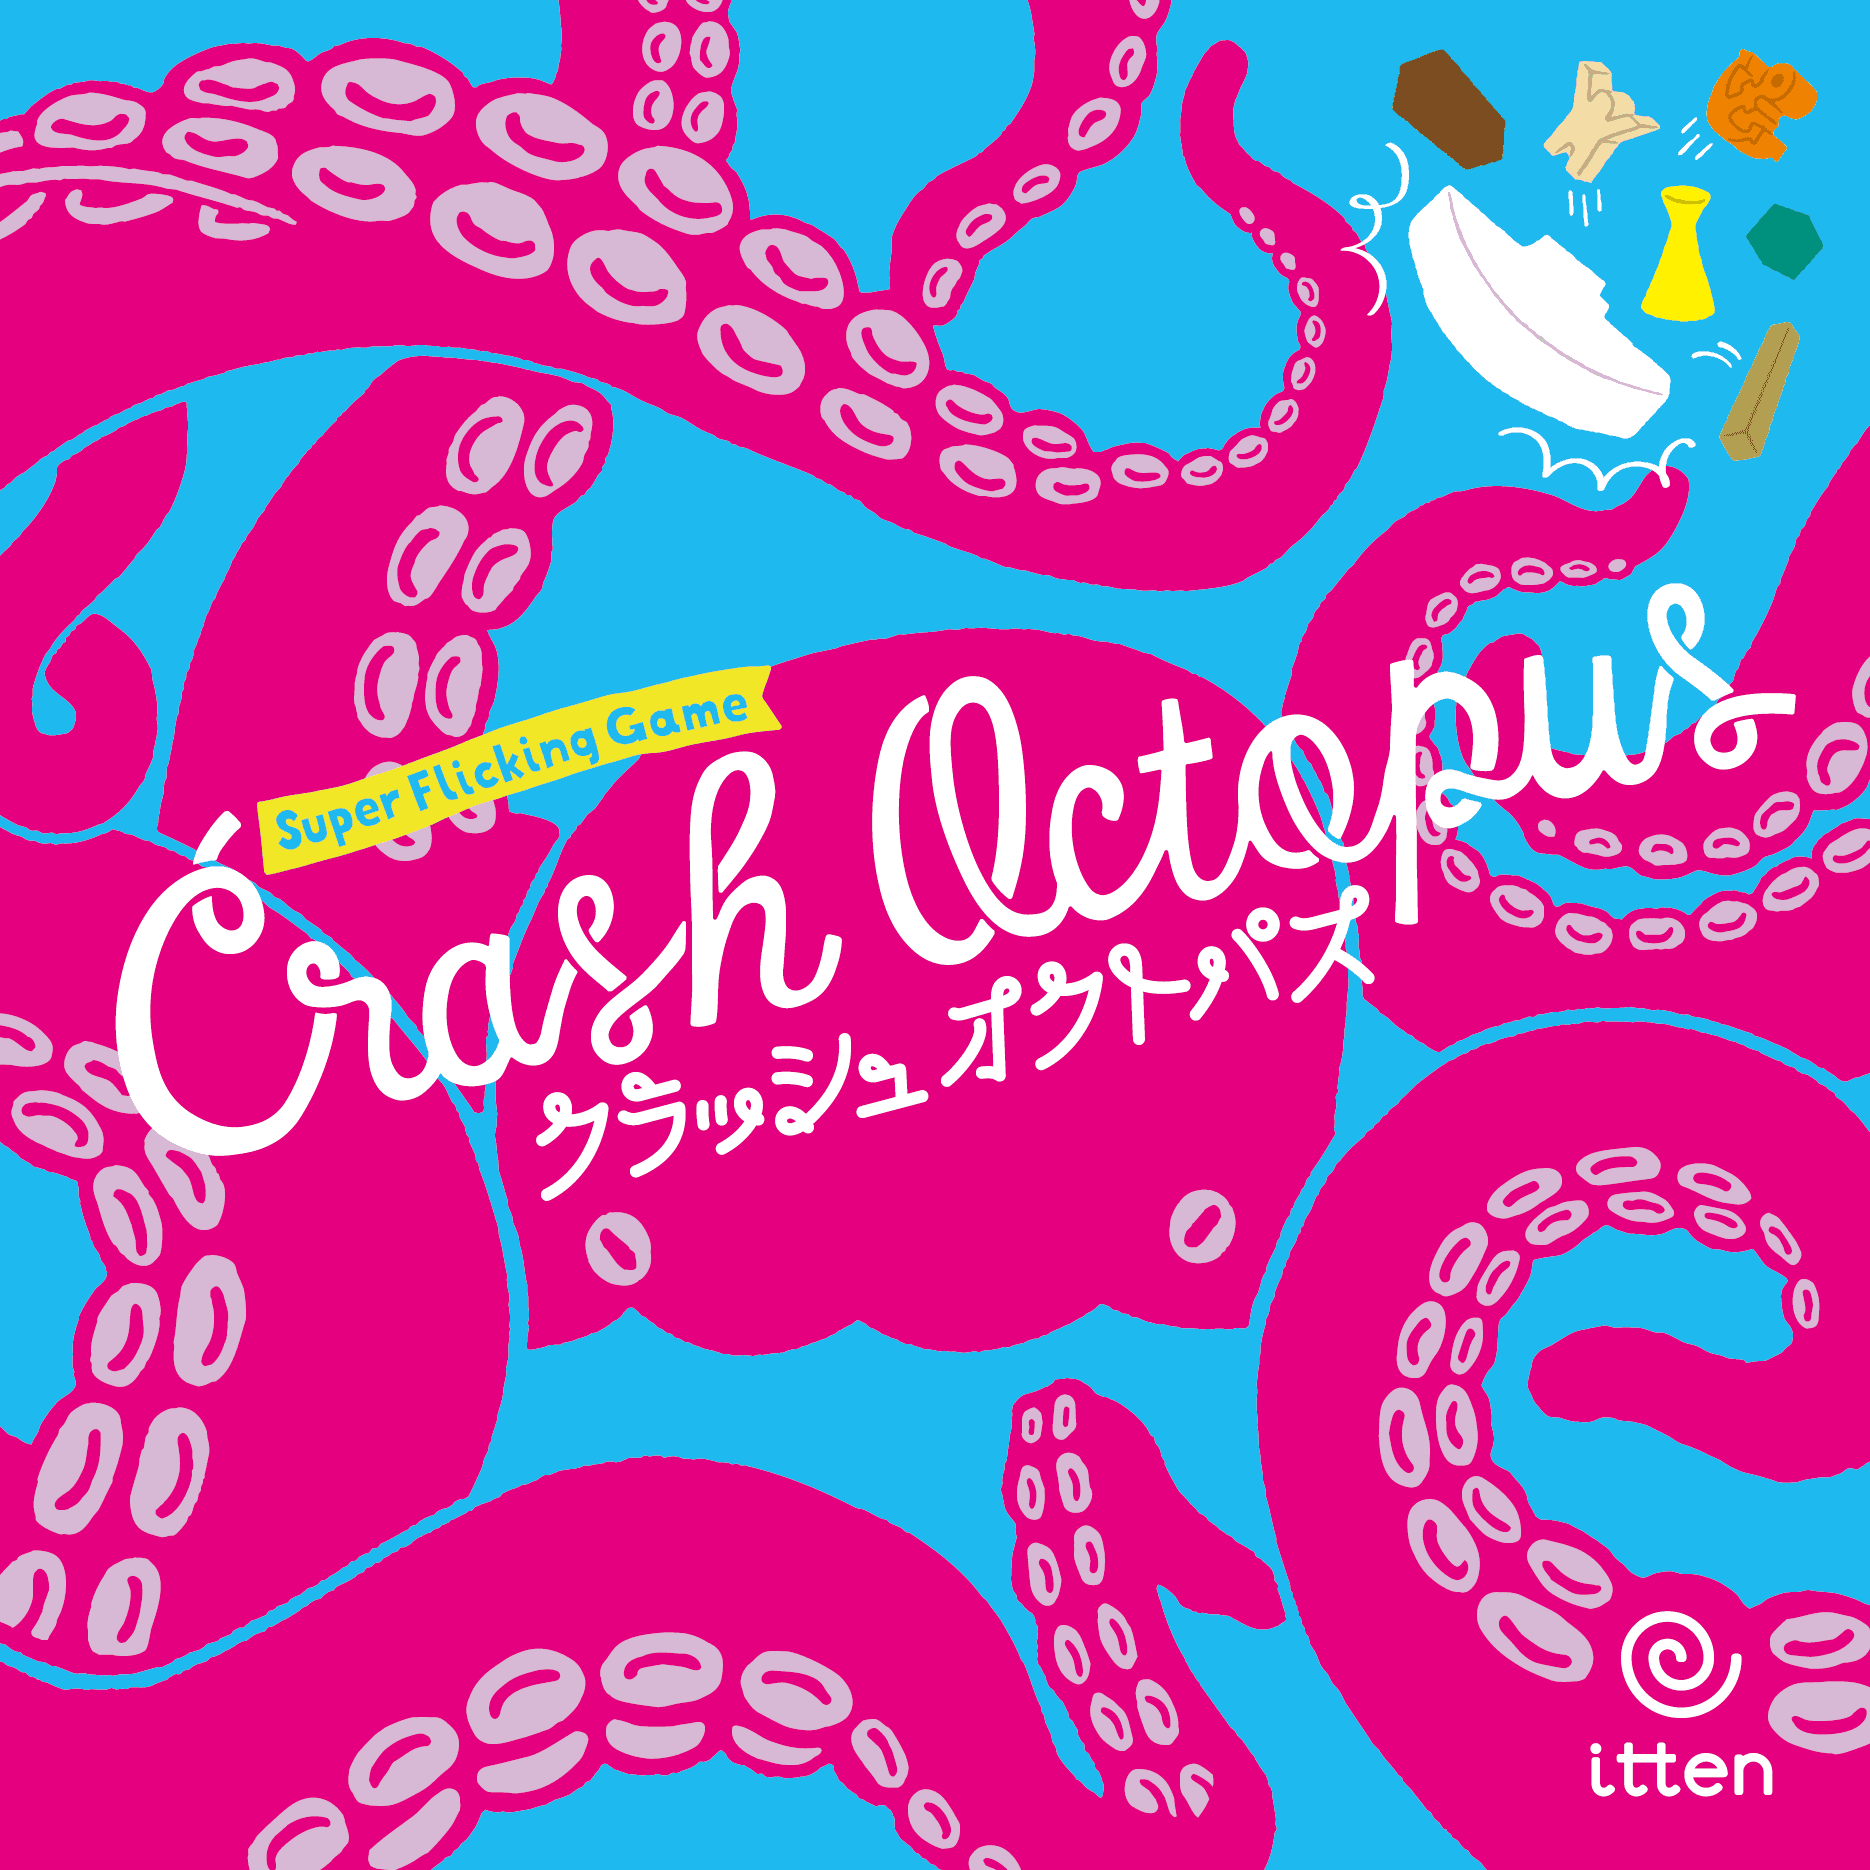 Crash Octopus - Gaming Library